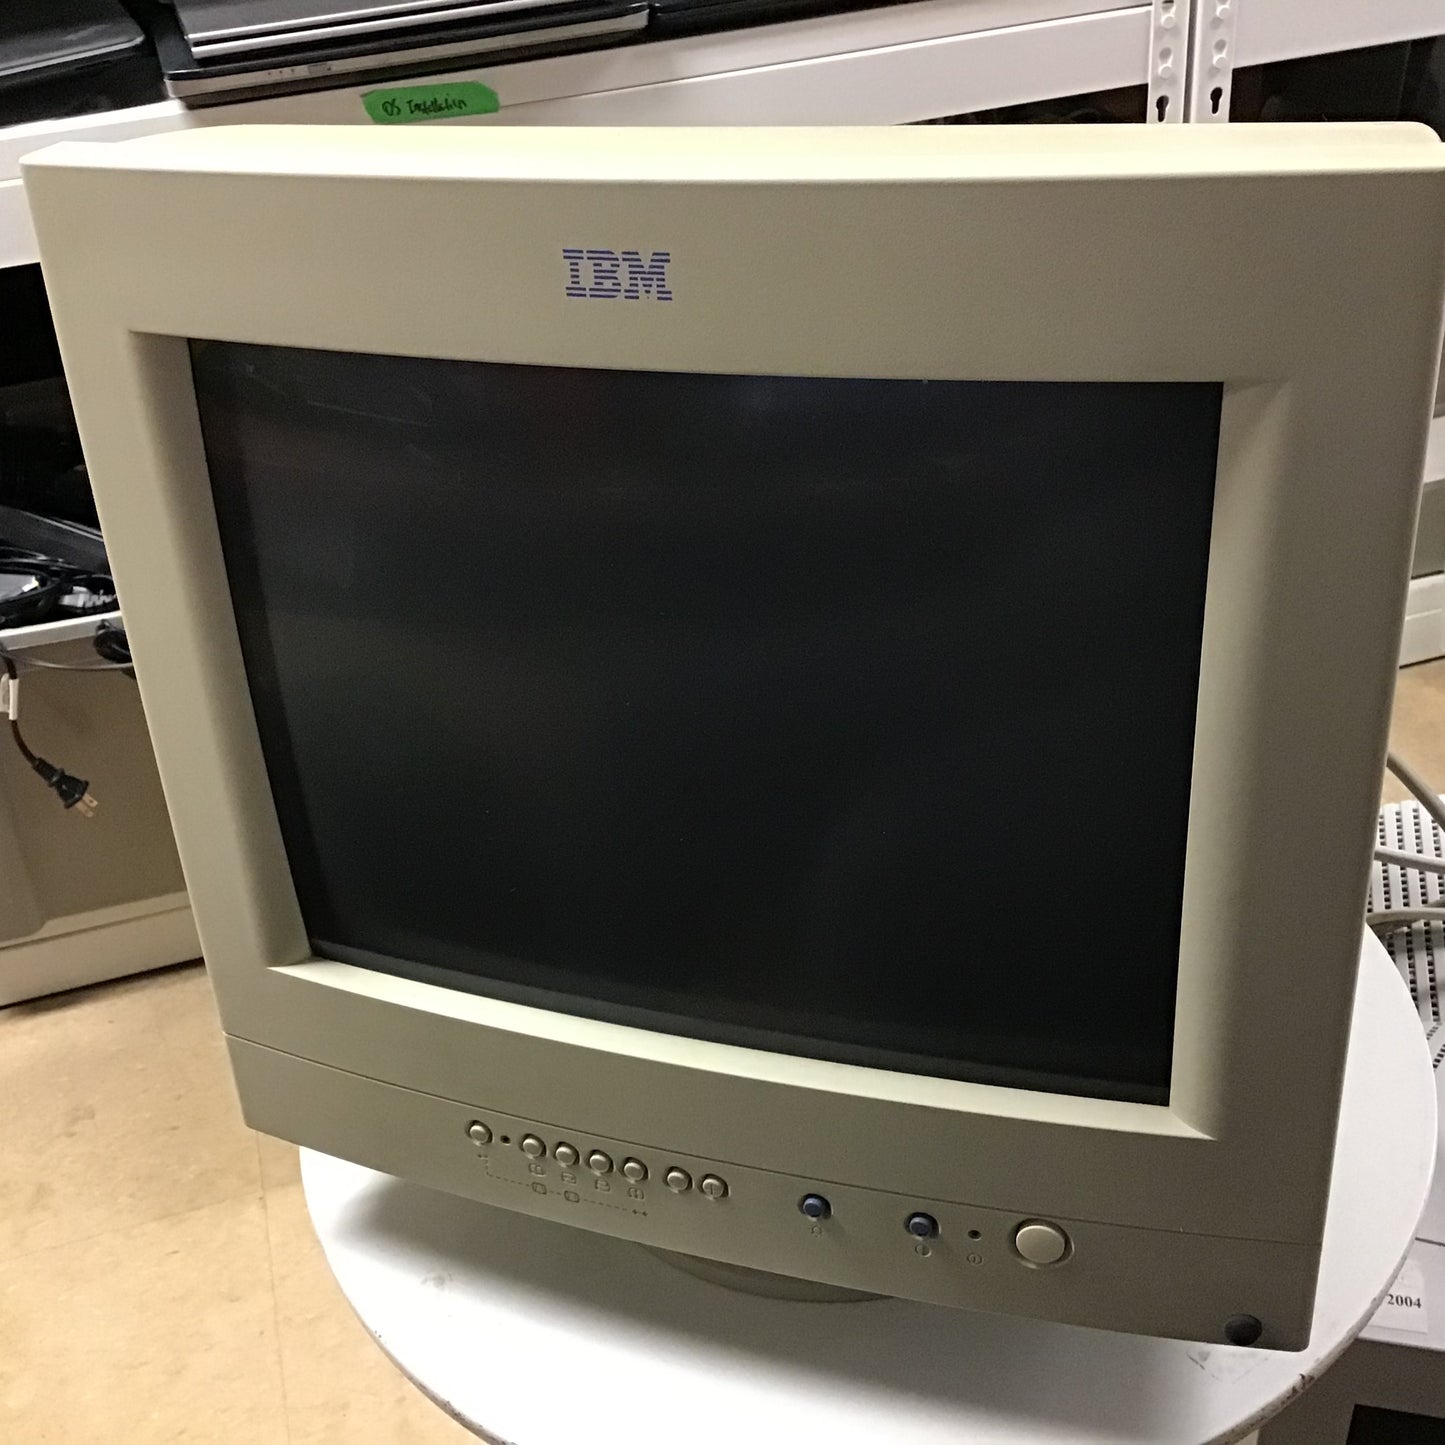 IBM CRT 13" Monitor